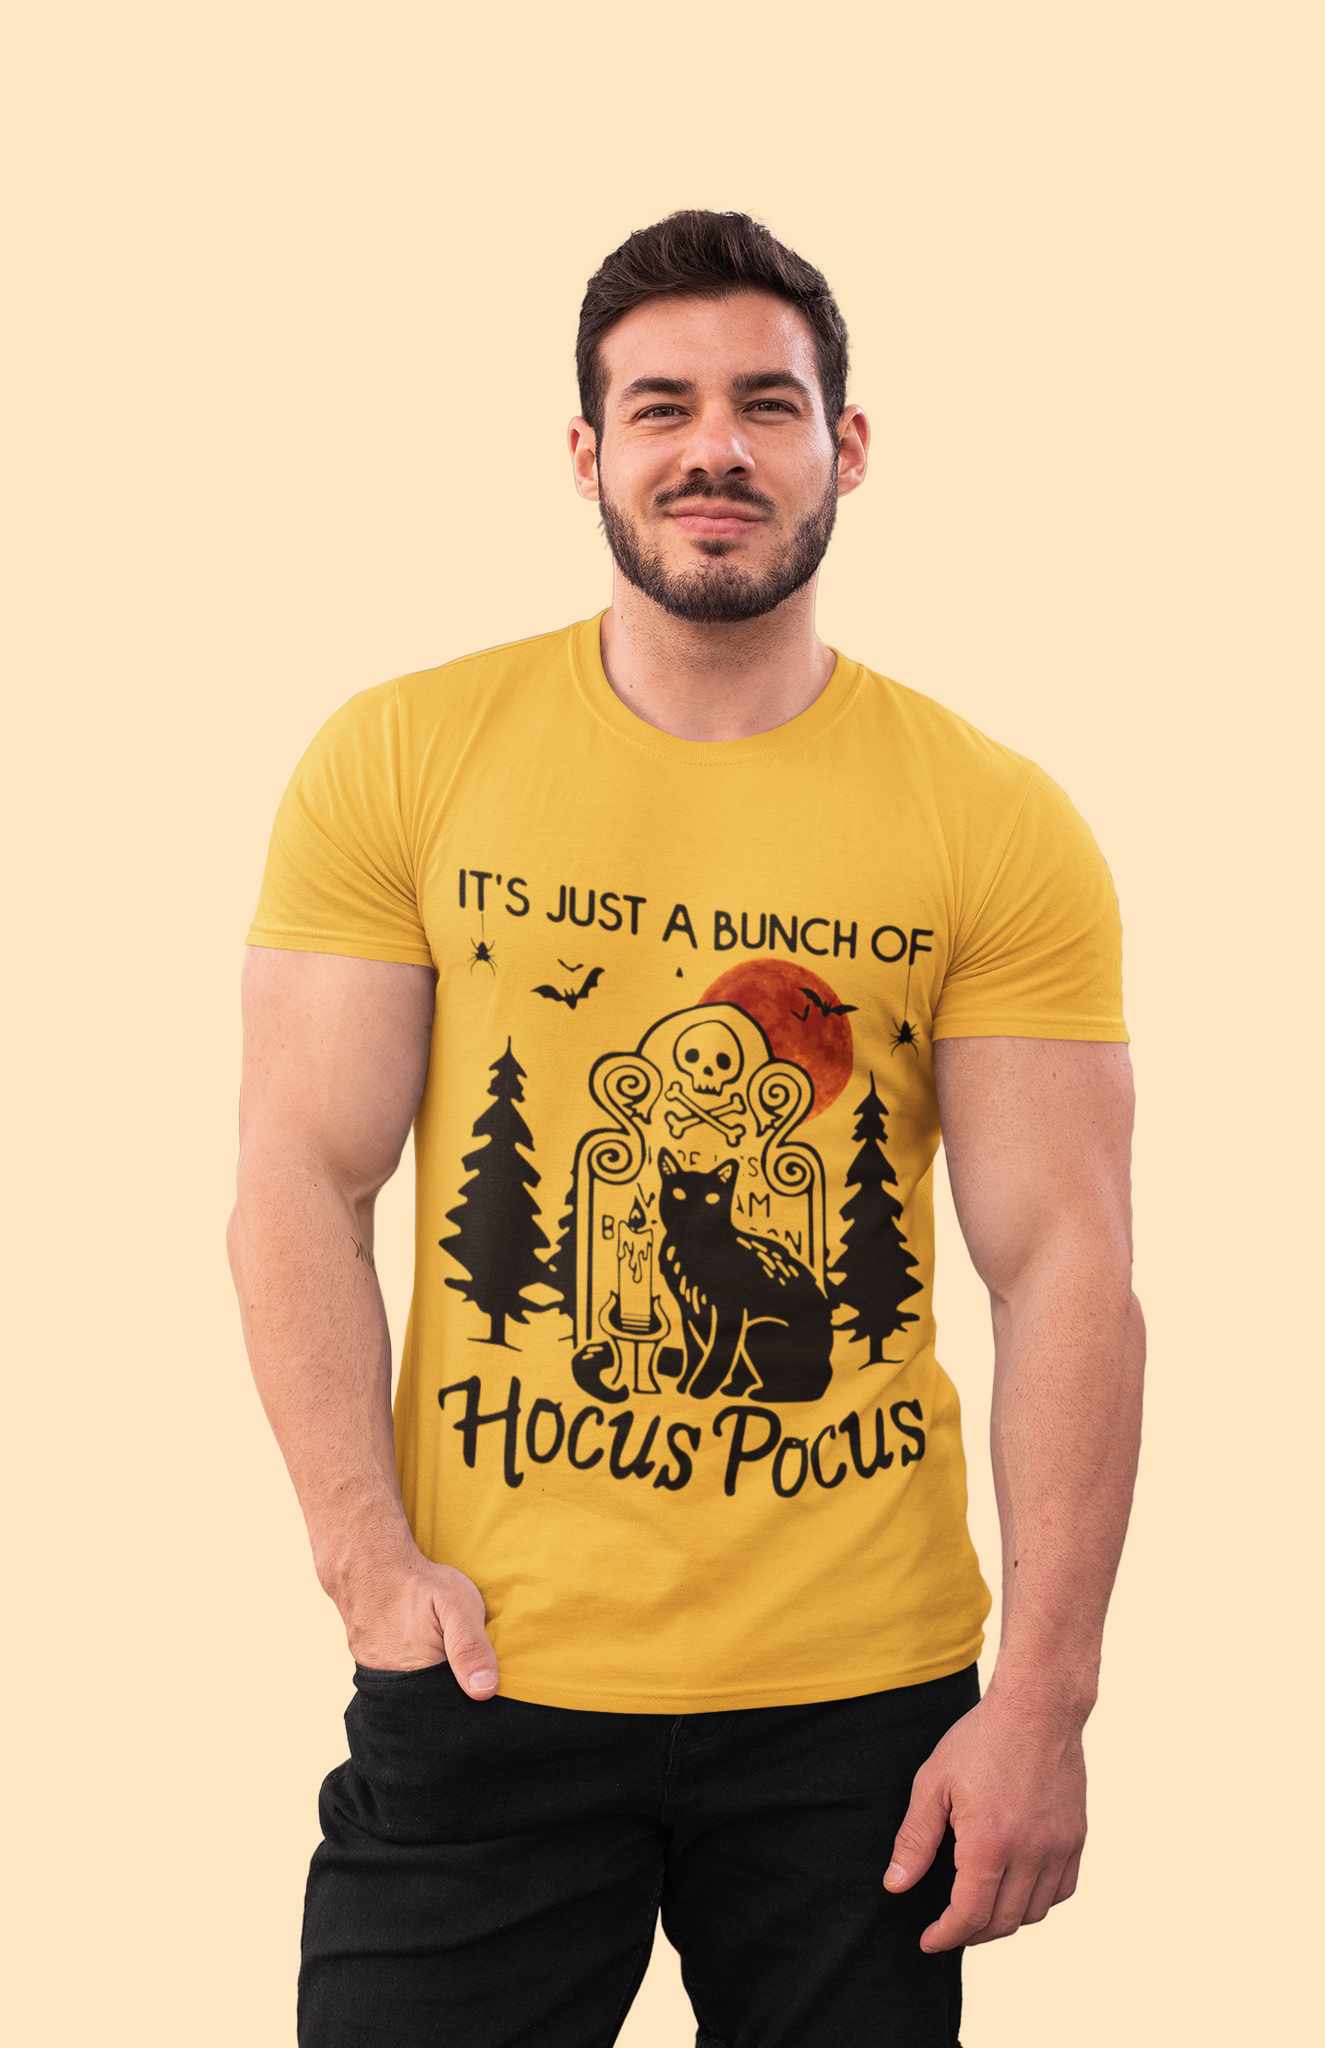 Hocus Pocus T Shirt, Thackery Binx Tshirt, Its Just A Bunch Of Hocus Pocus Shirt, Halloween Gifts